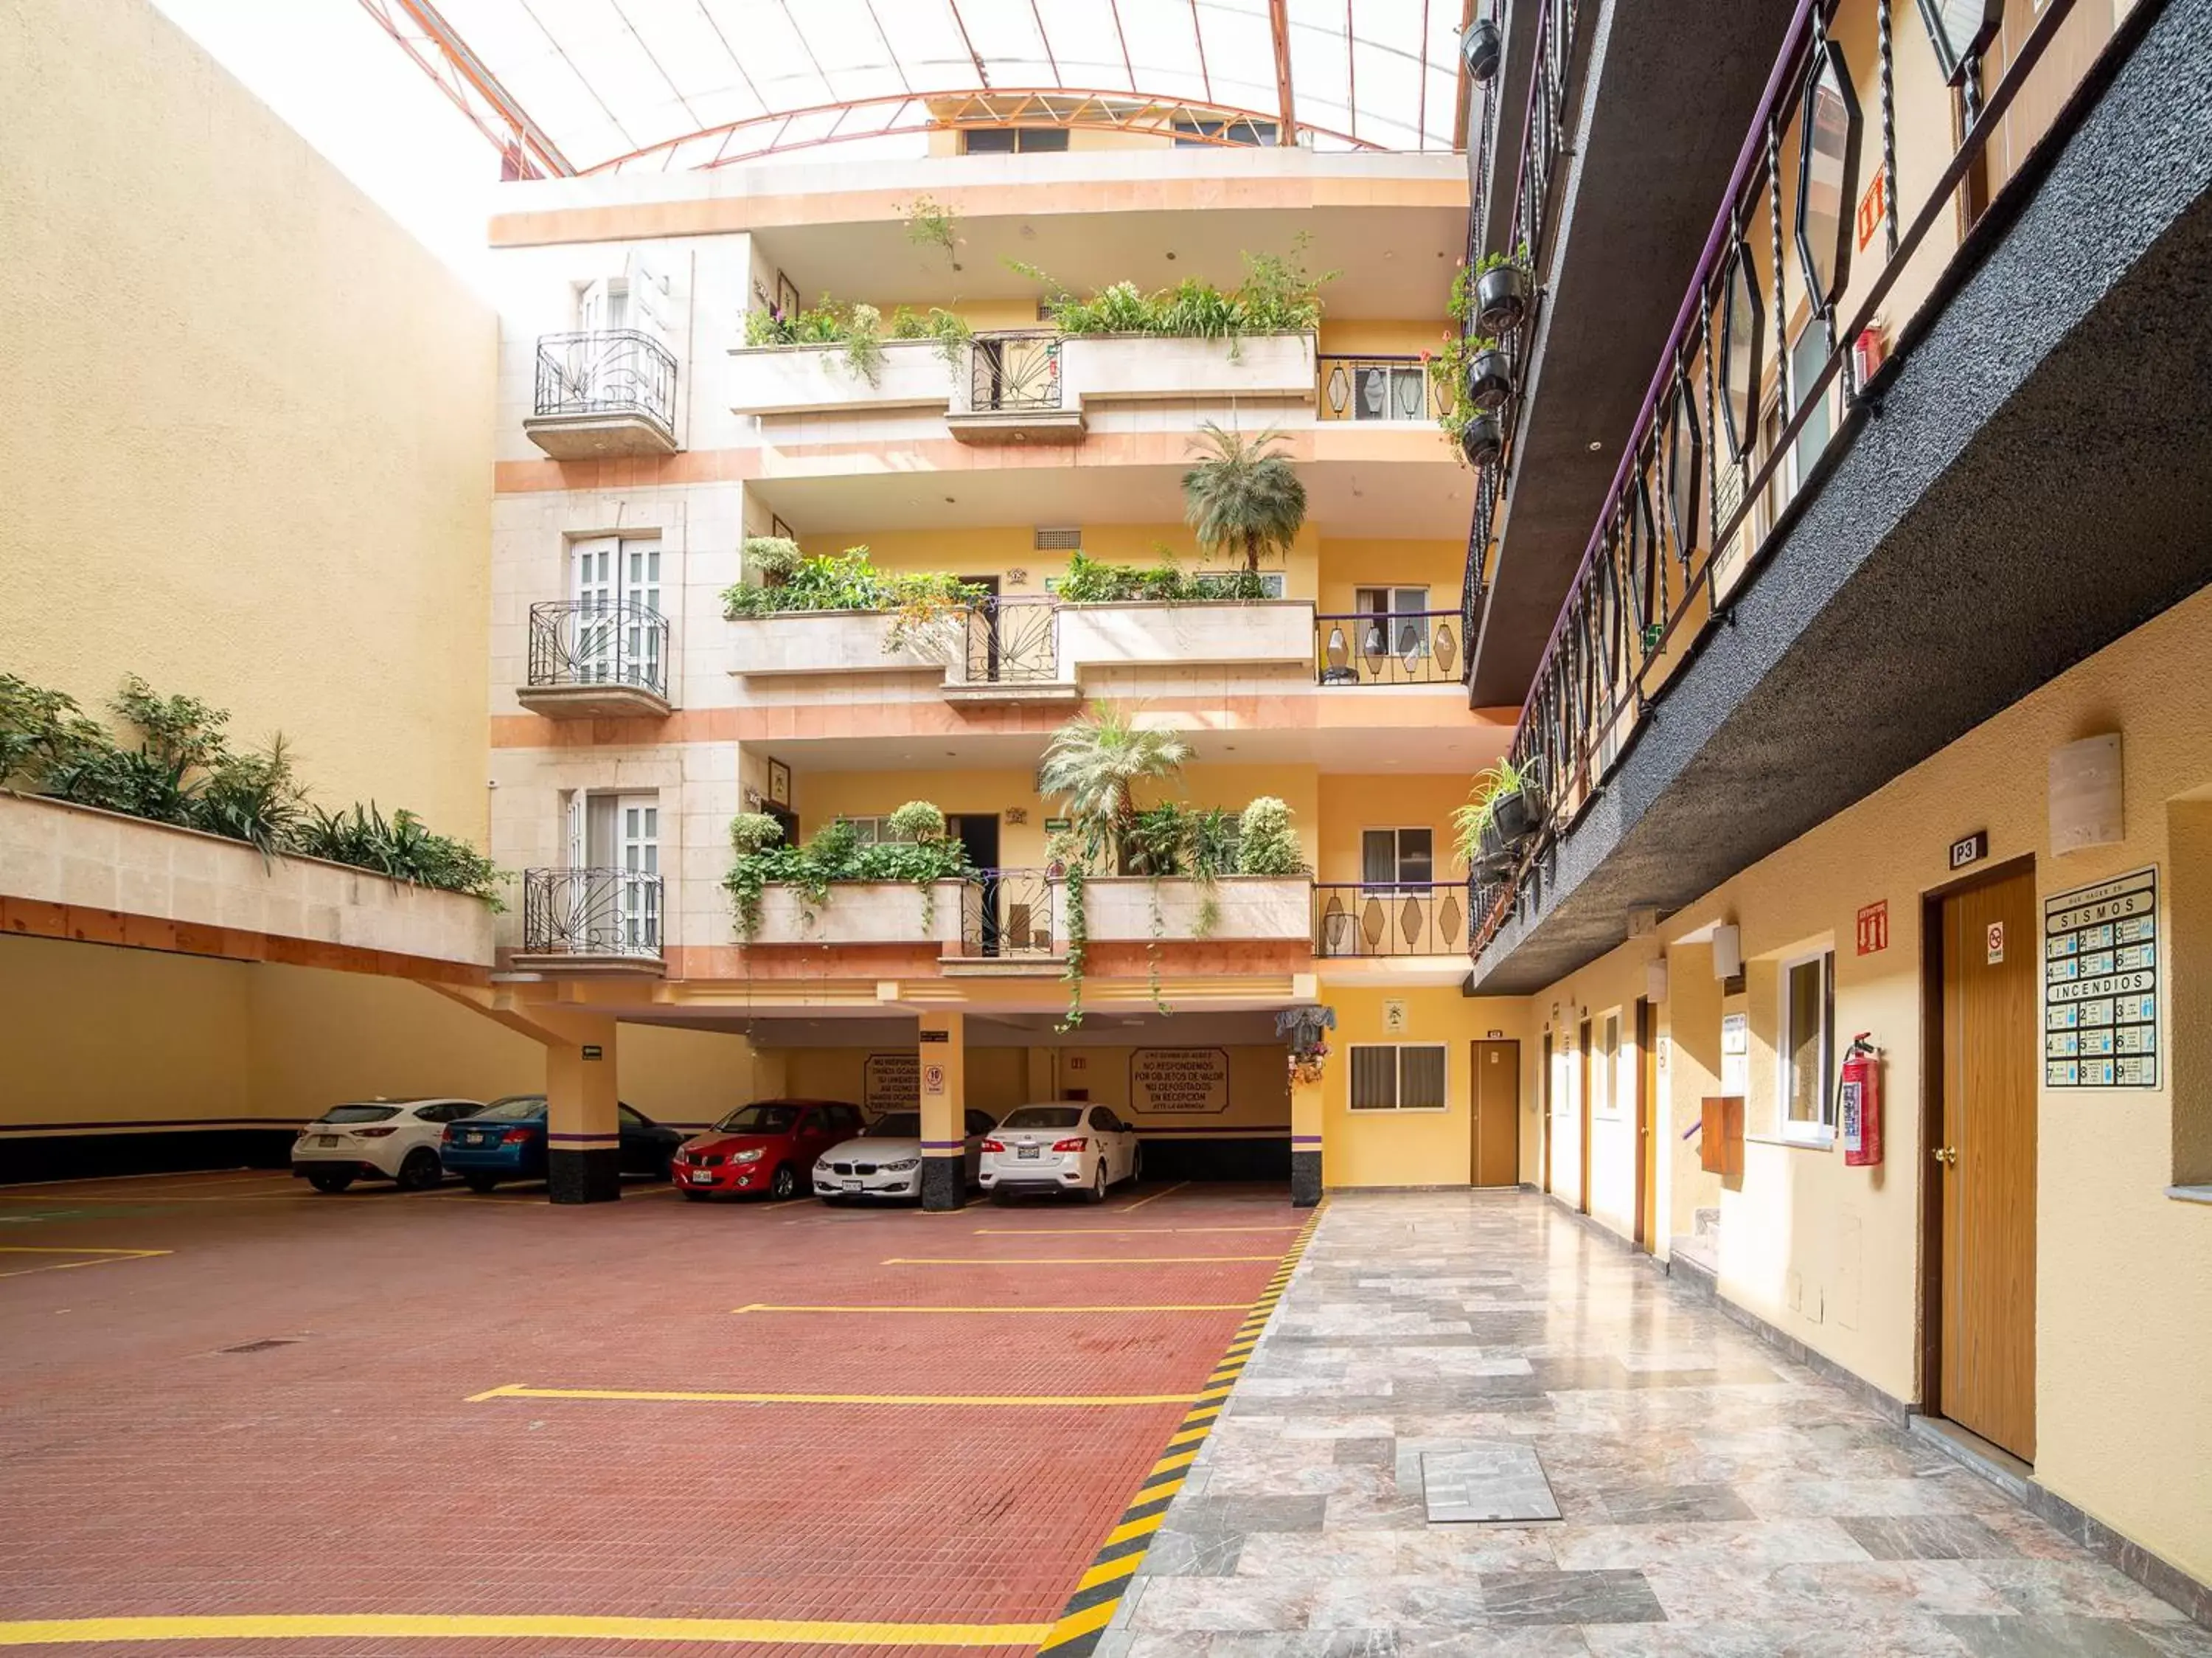 Area and facilities in Hotel Santa Maria